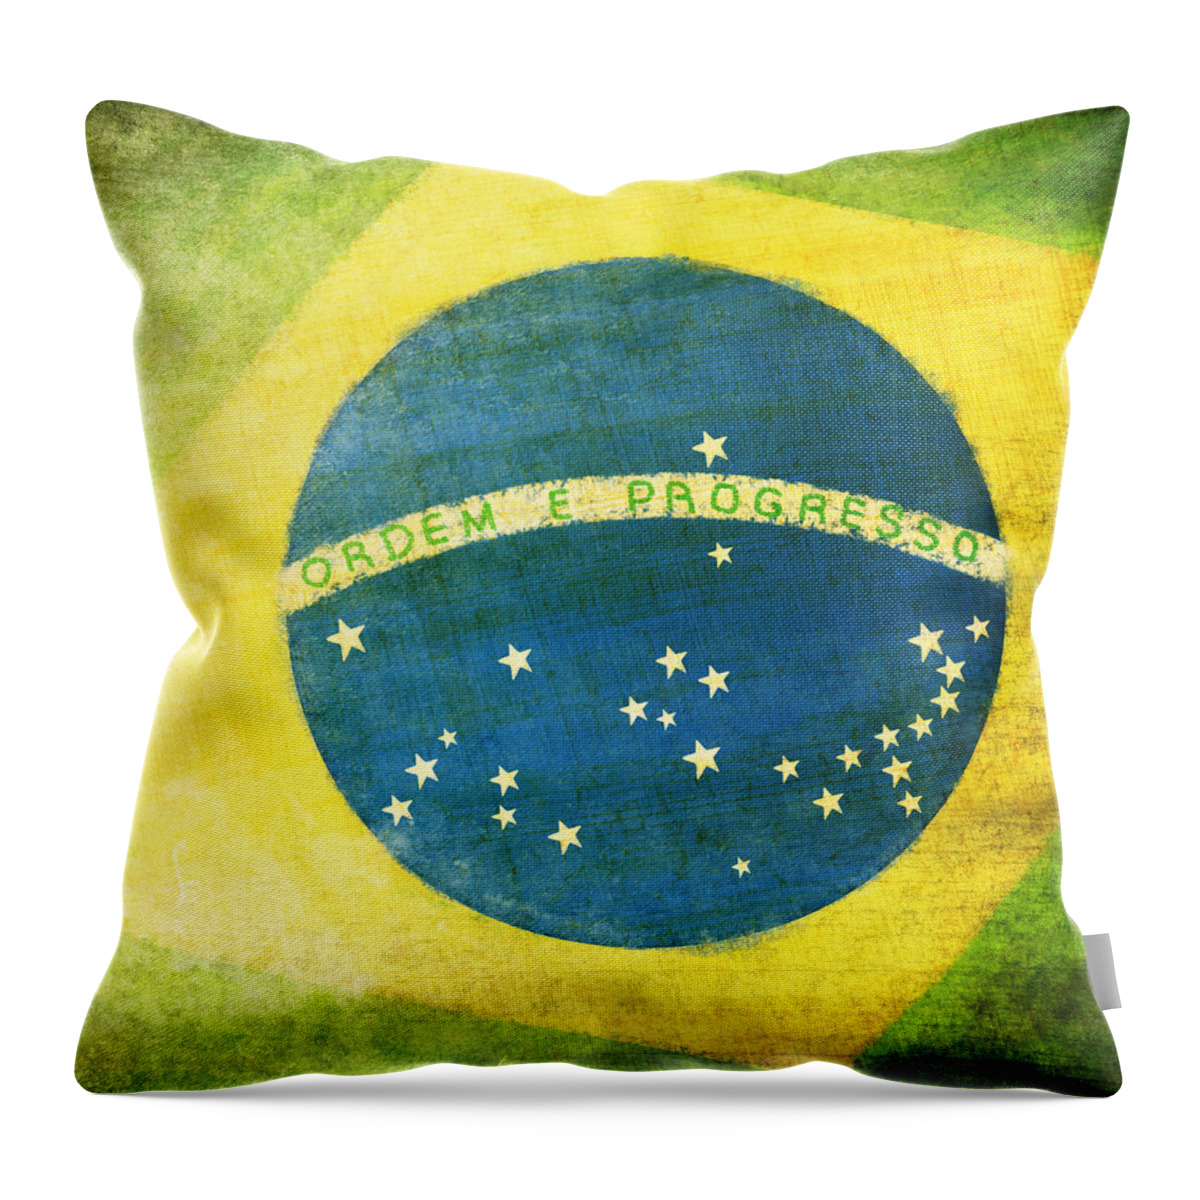 Abstract Throw Pillow featuring the painting Brazil flag by Setsiri Silapasuwanchai